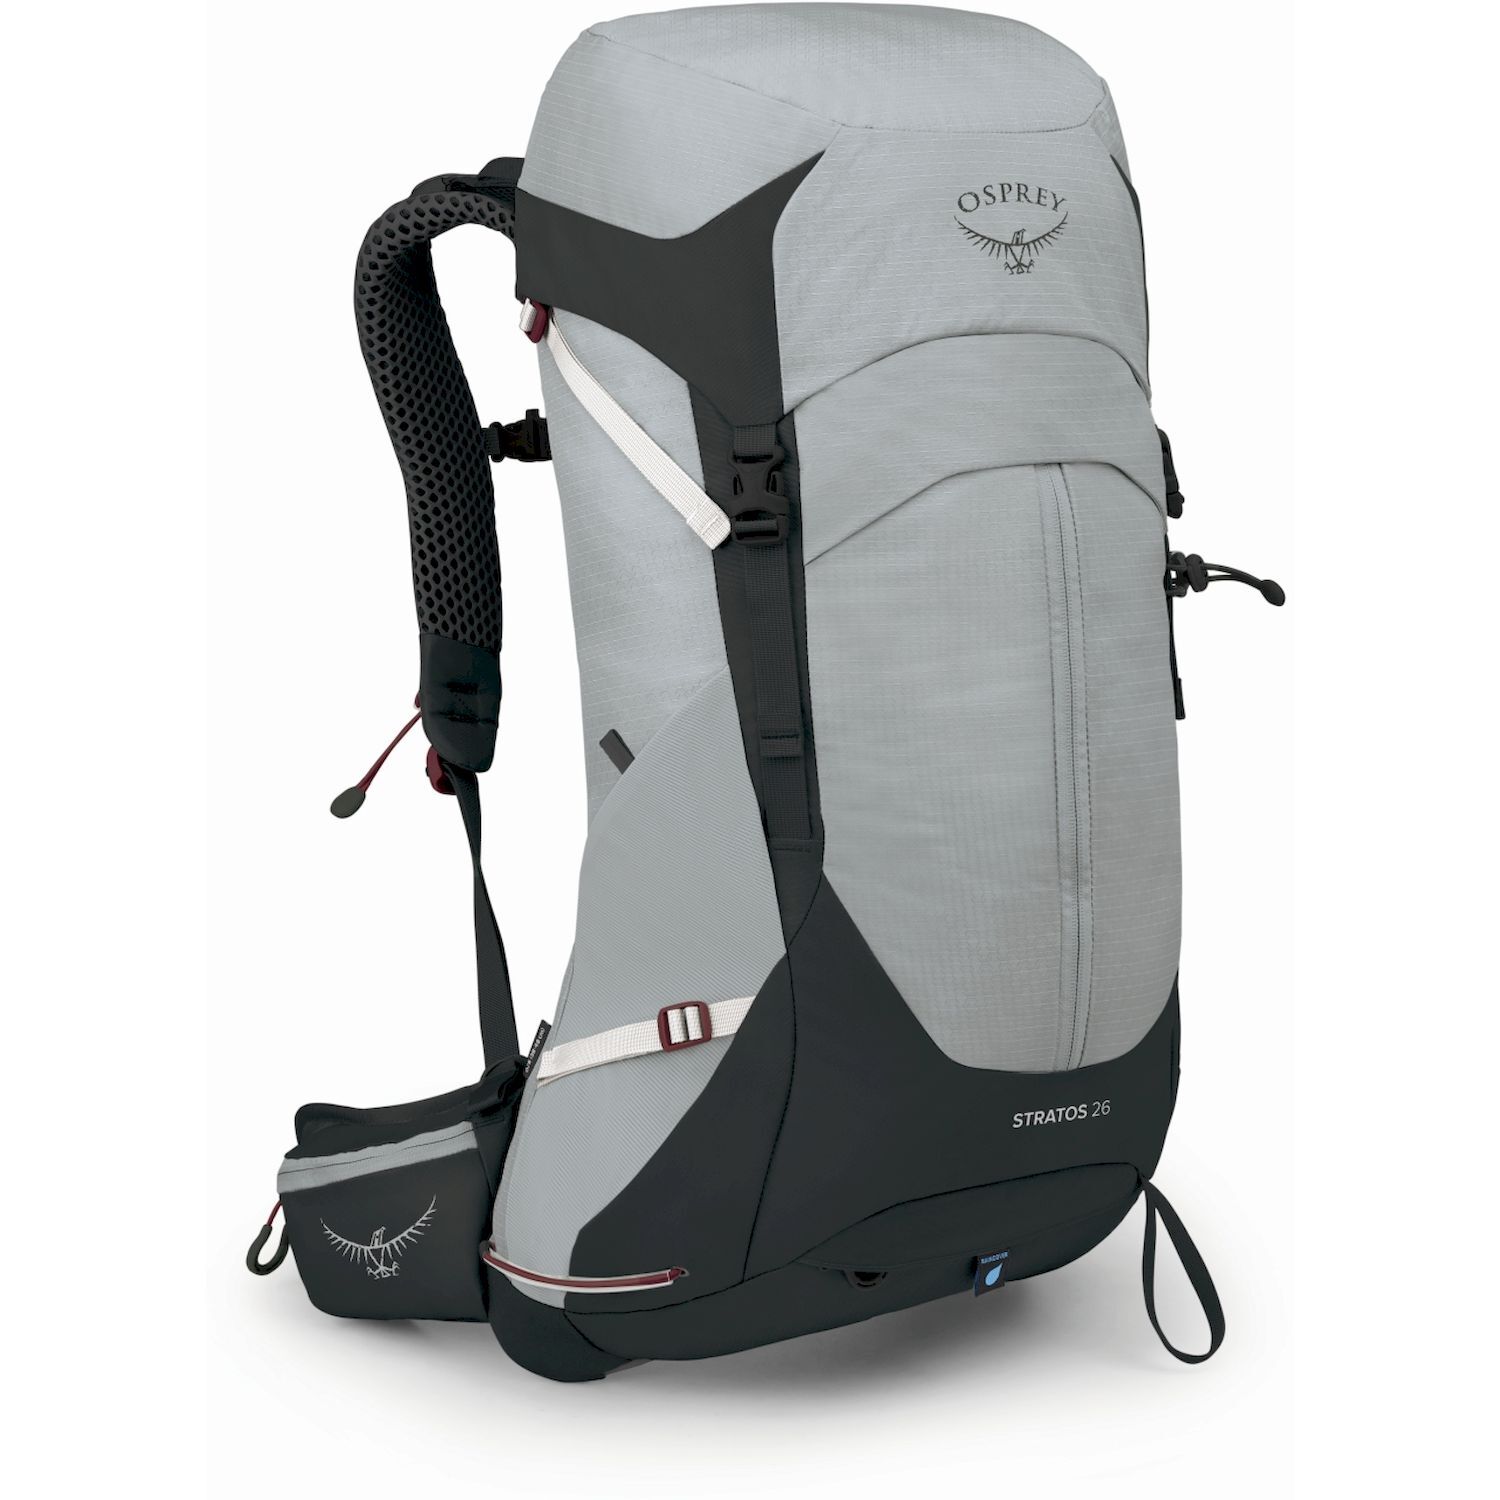 Osprey Stratos Plus 26 - Walking backpack - Men's